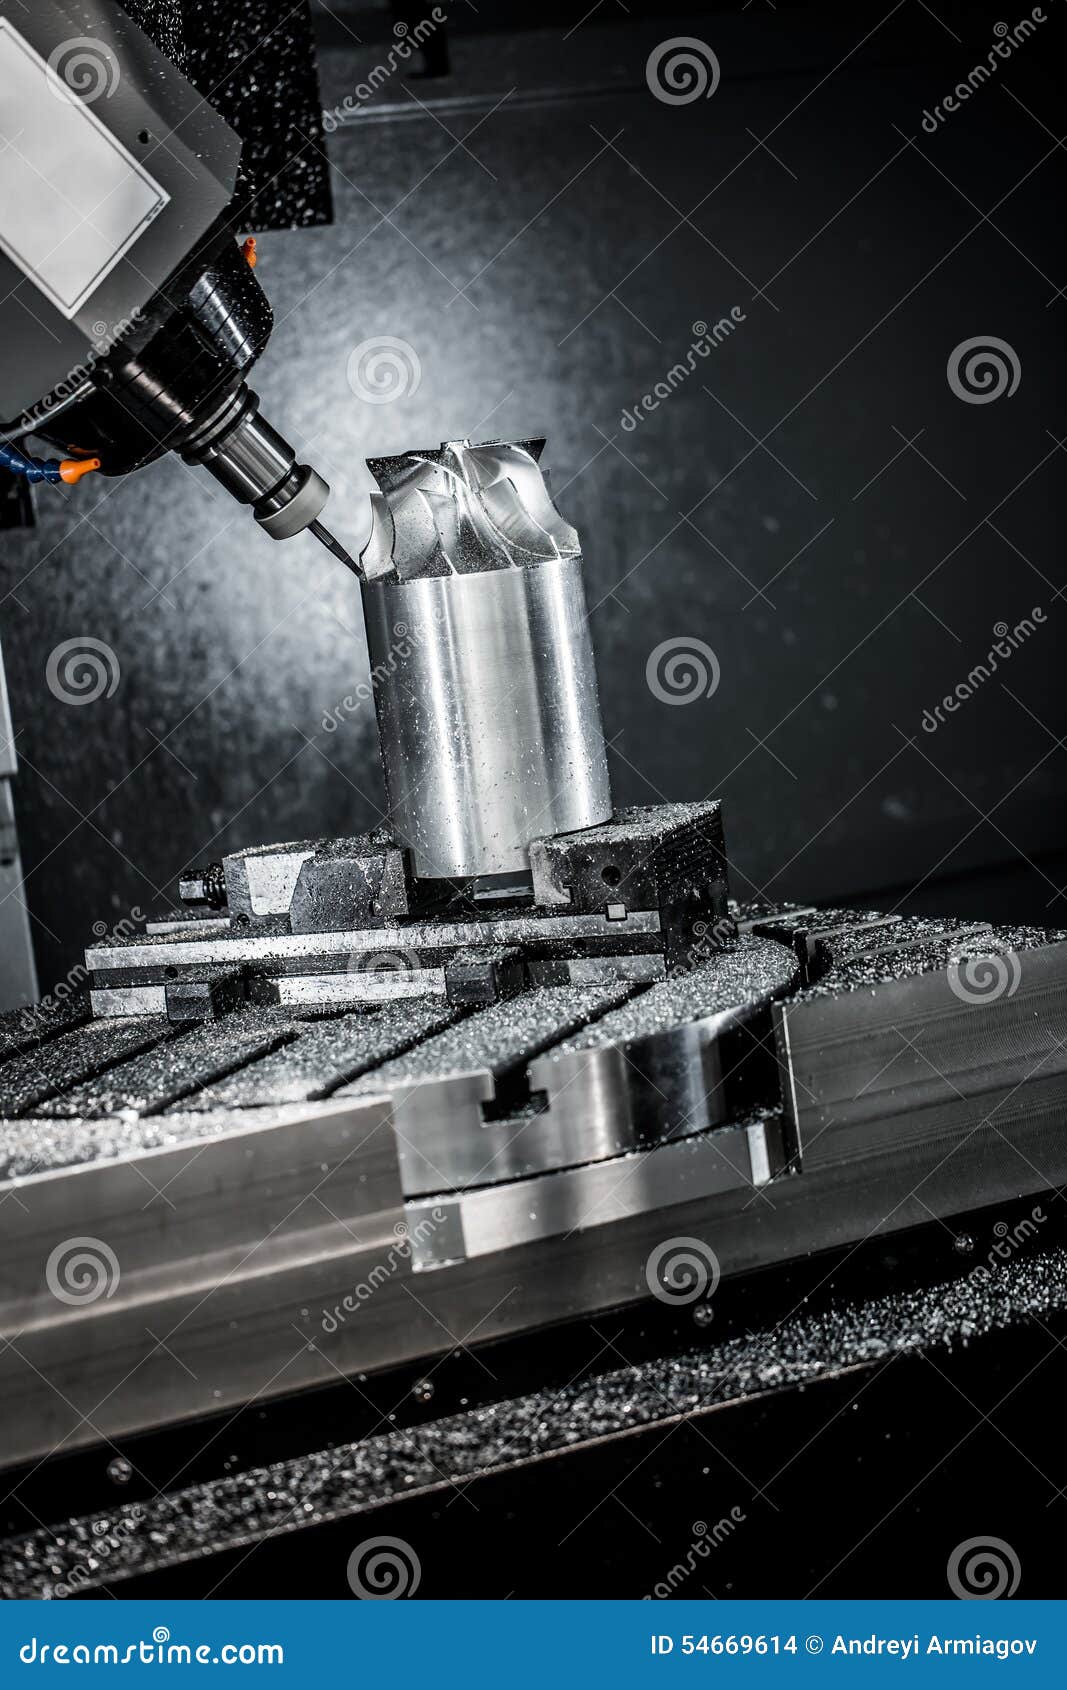 metalworking cnc milling machine.